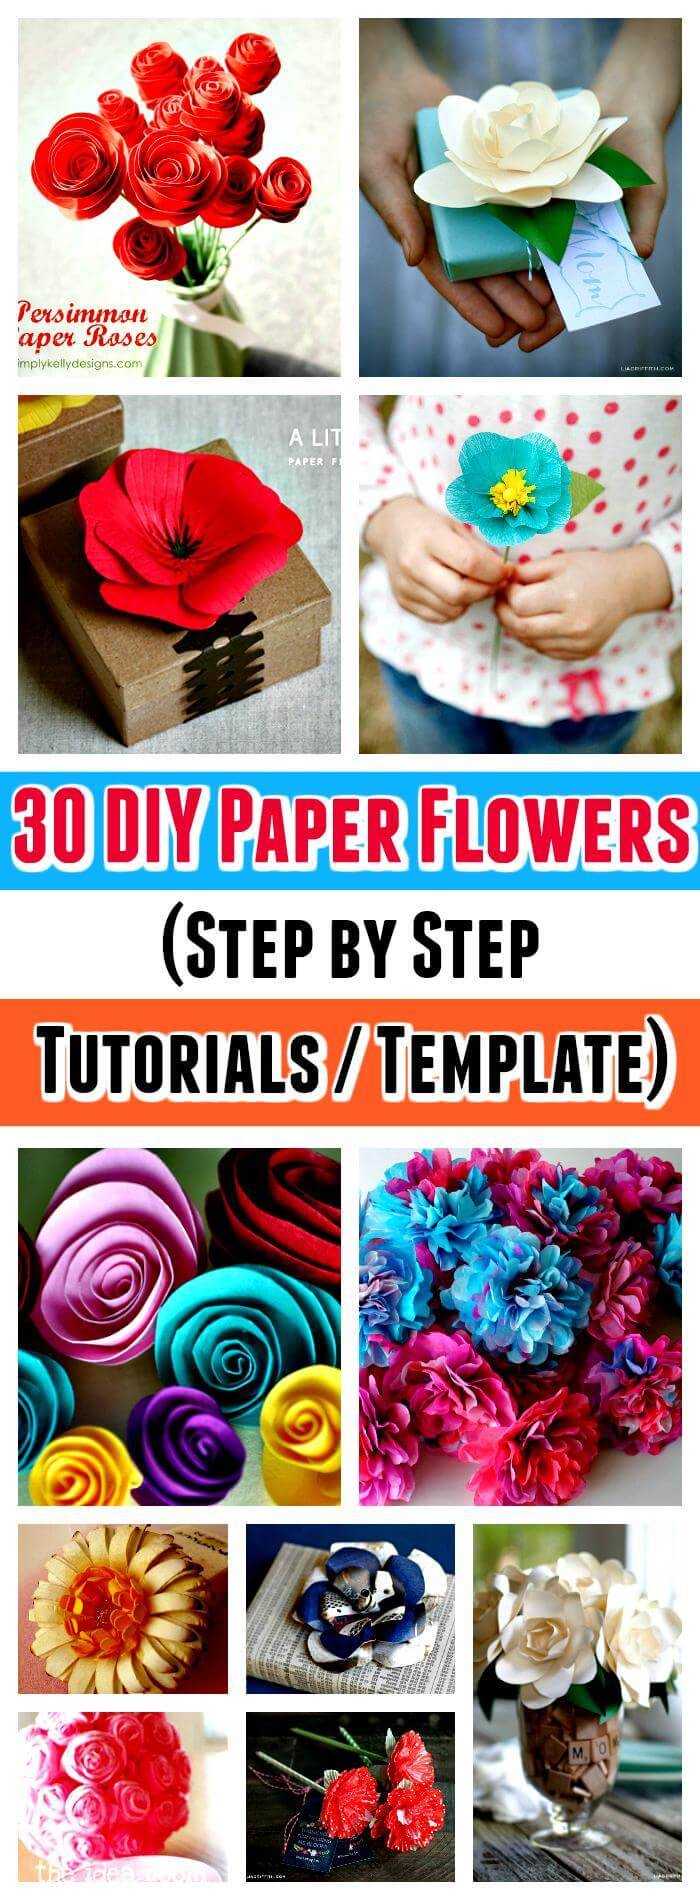 30 DIY Paper Flowers (Step by Step Tutorials / Template) ⋆ DIY Crafts